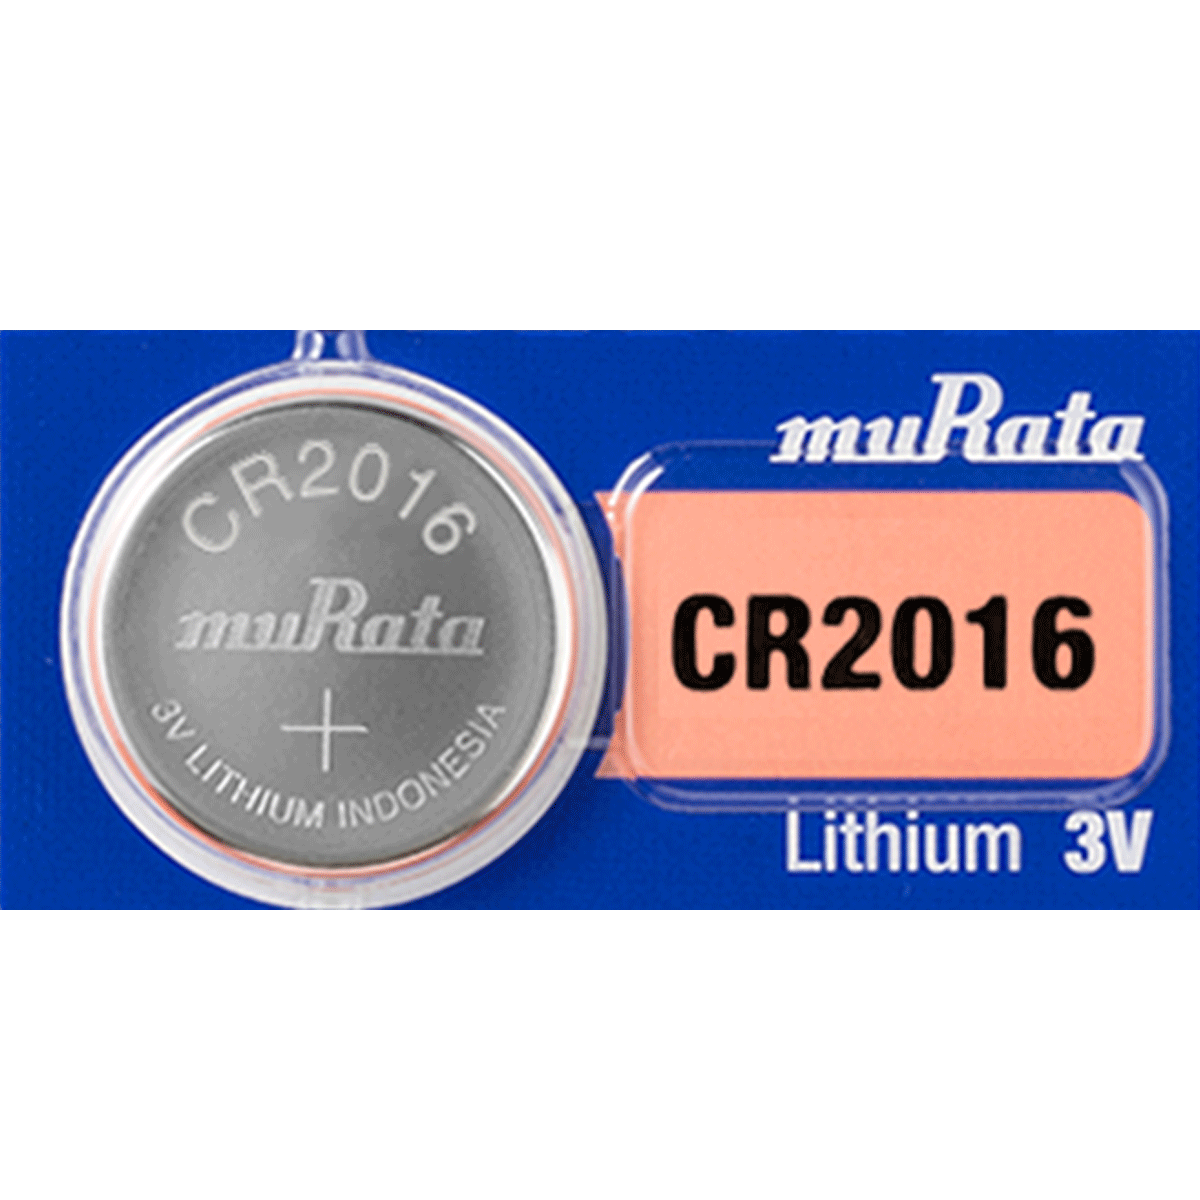 Panasonic CR2016-4 CR2016 3V Lithium Coin Battery (Pack of 4)